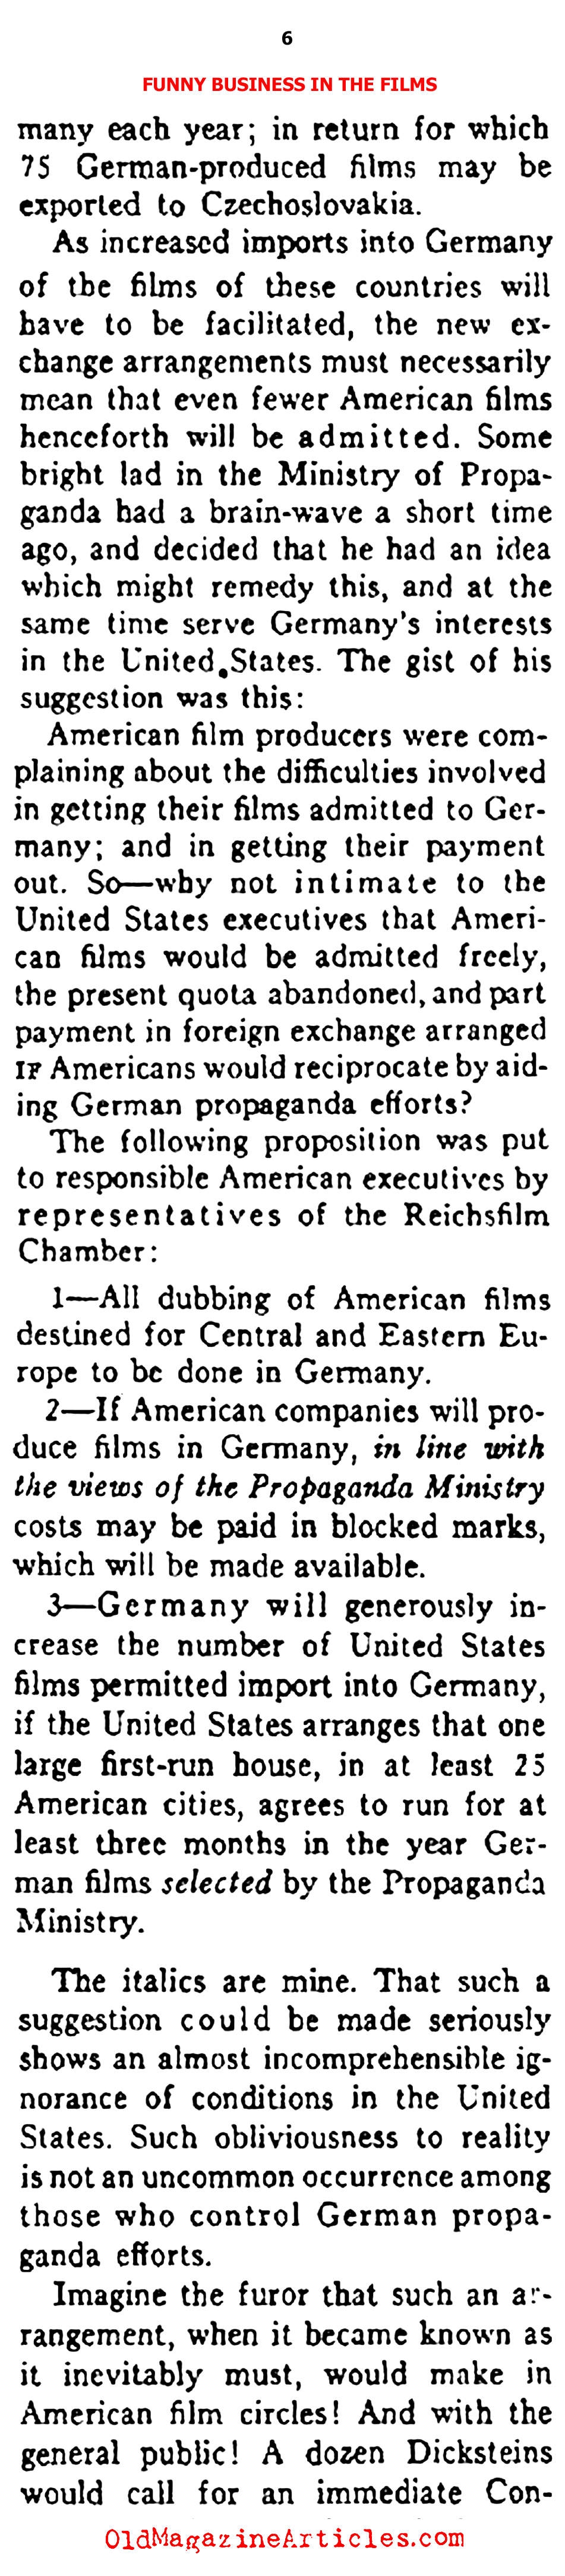 The Nazi Hollywood (Ken Magazine, 1938)